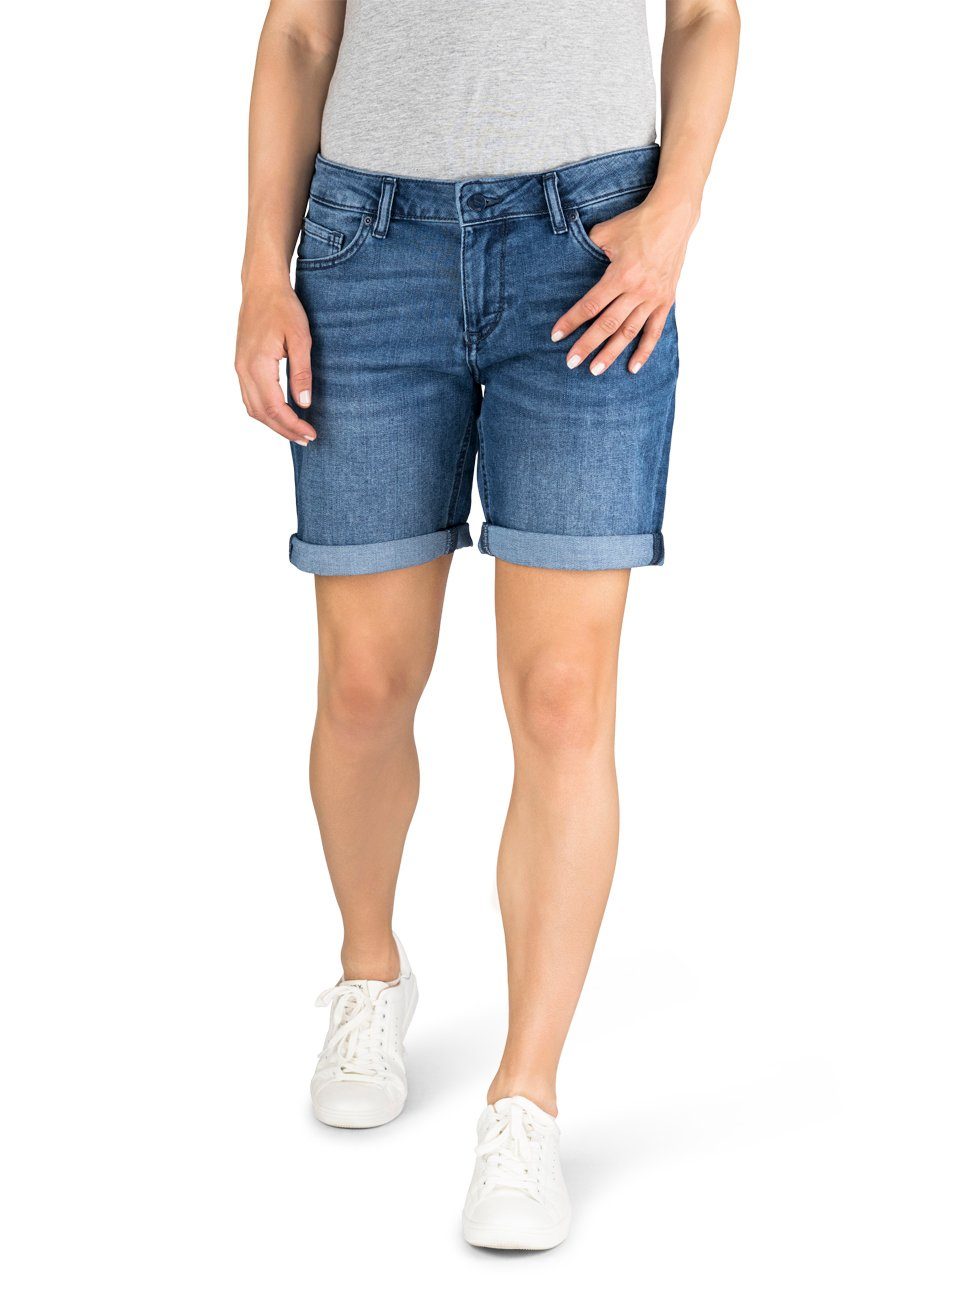 MUSTANG Jeansshorts Damen Шорты Bermuda Regular Fit Basic Hotpants mit Stretch